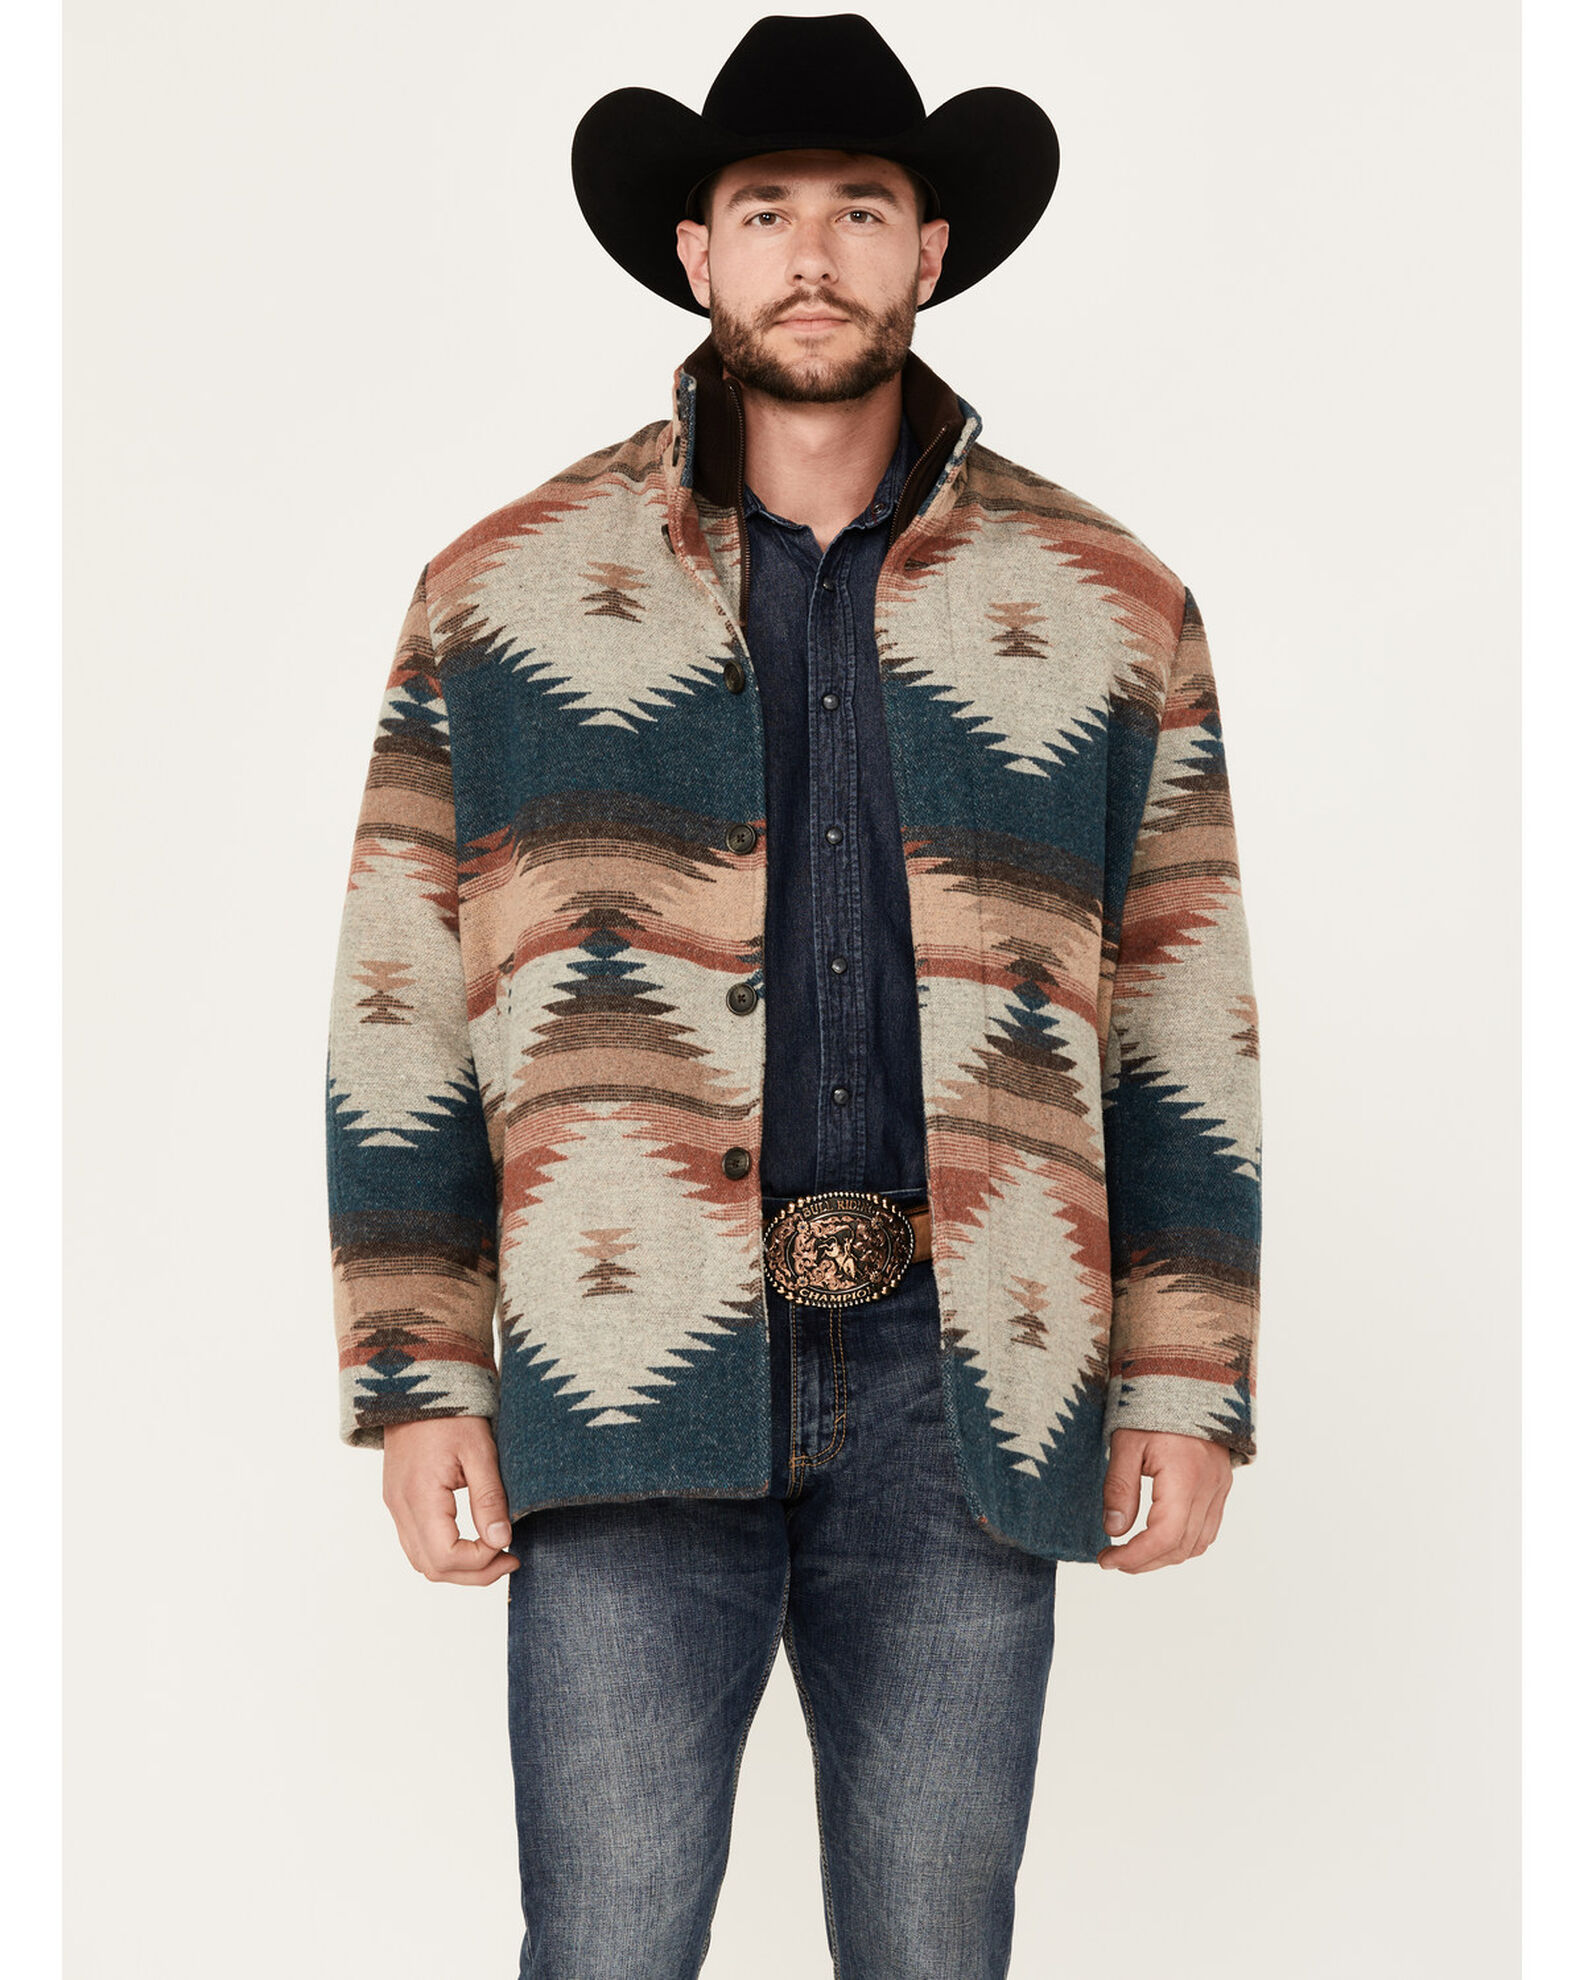 Product Name: Cripple Creek Men's Southwestern Print Wool Jacket